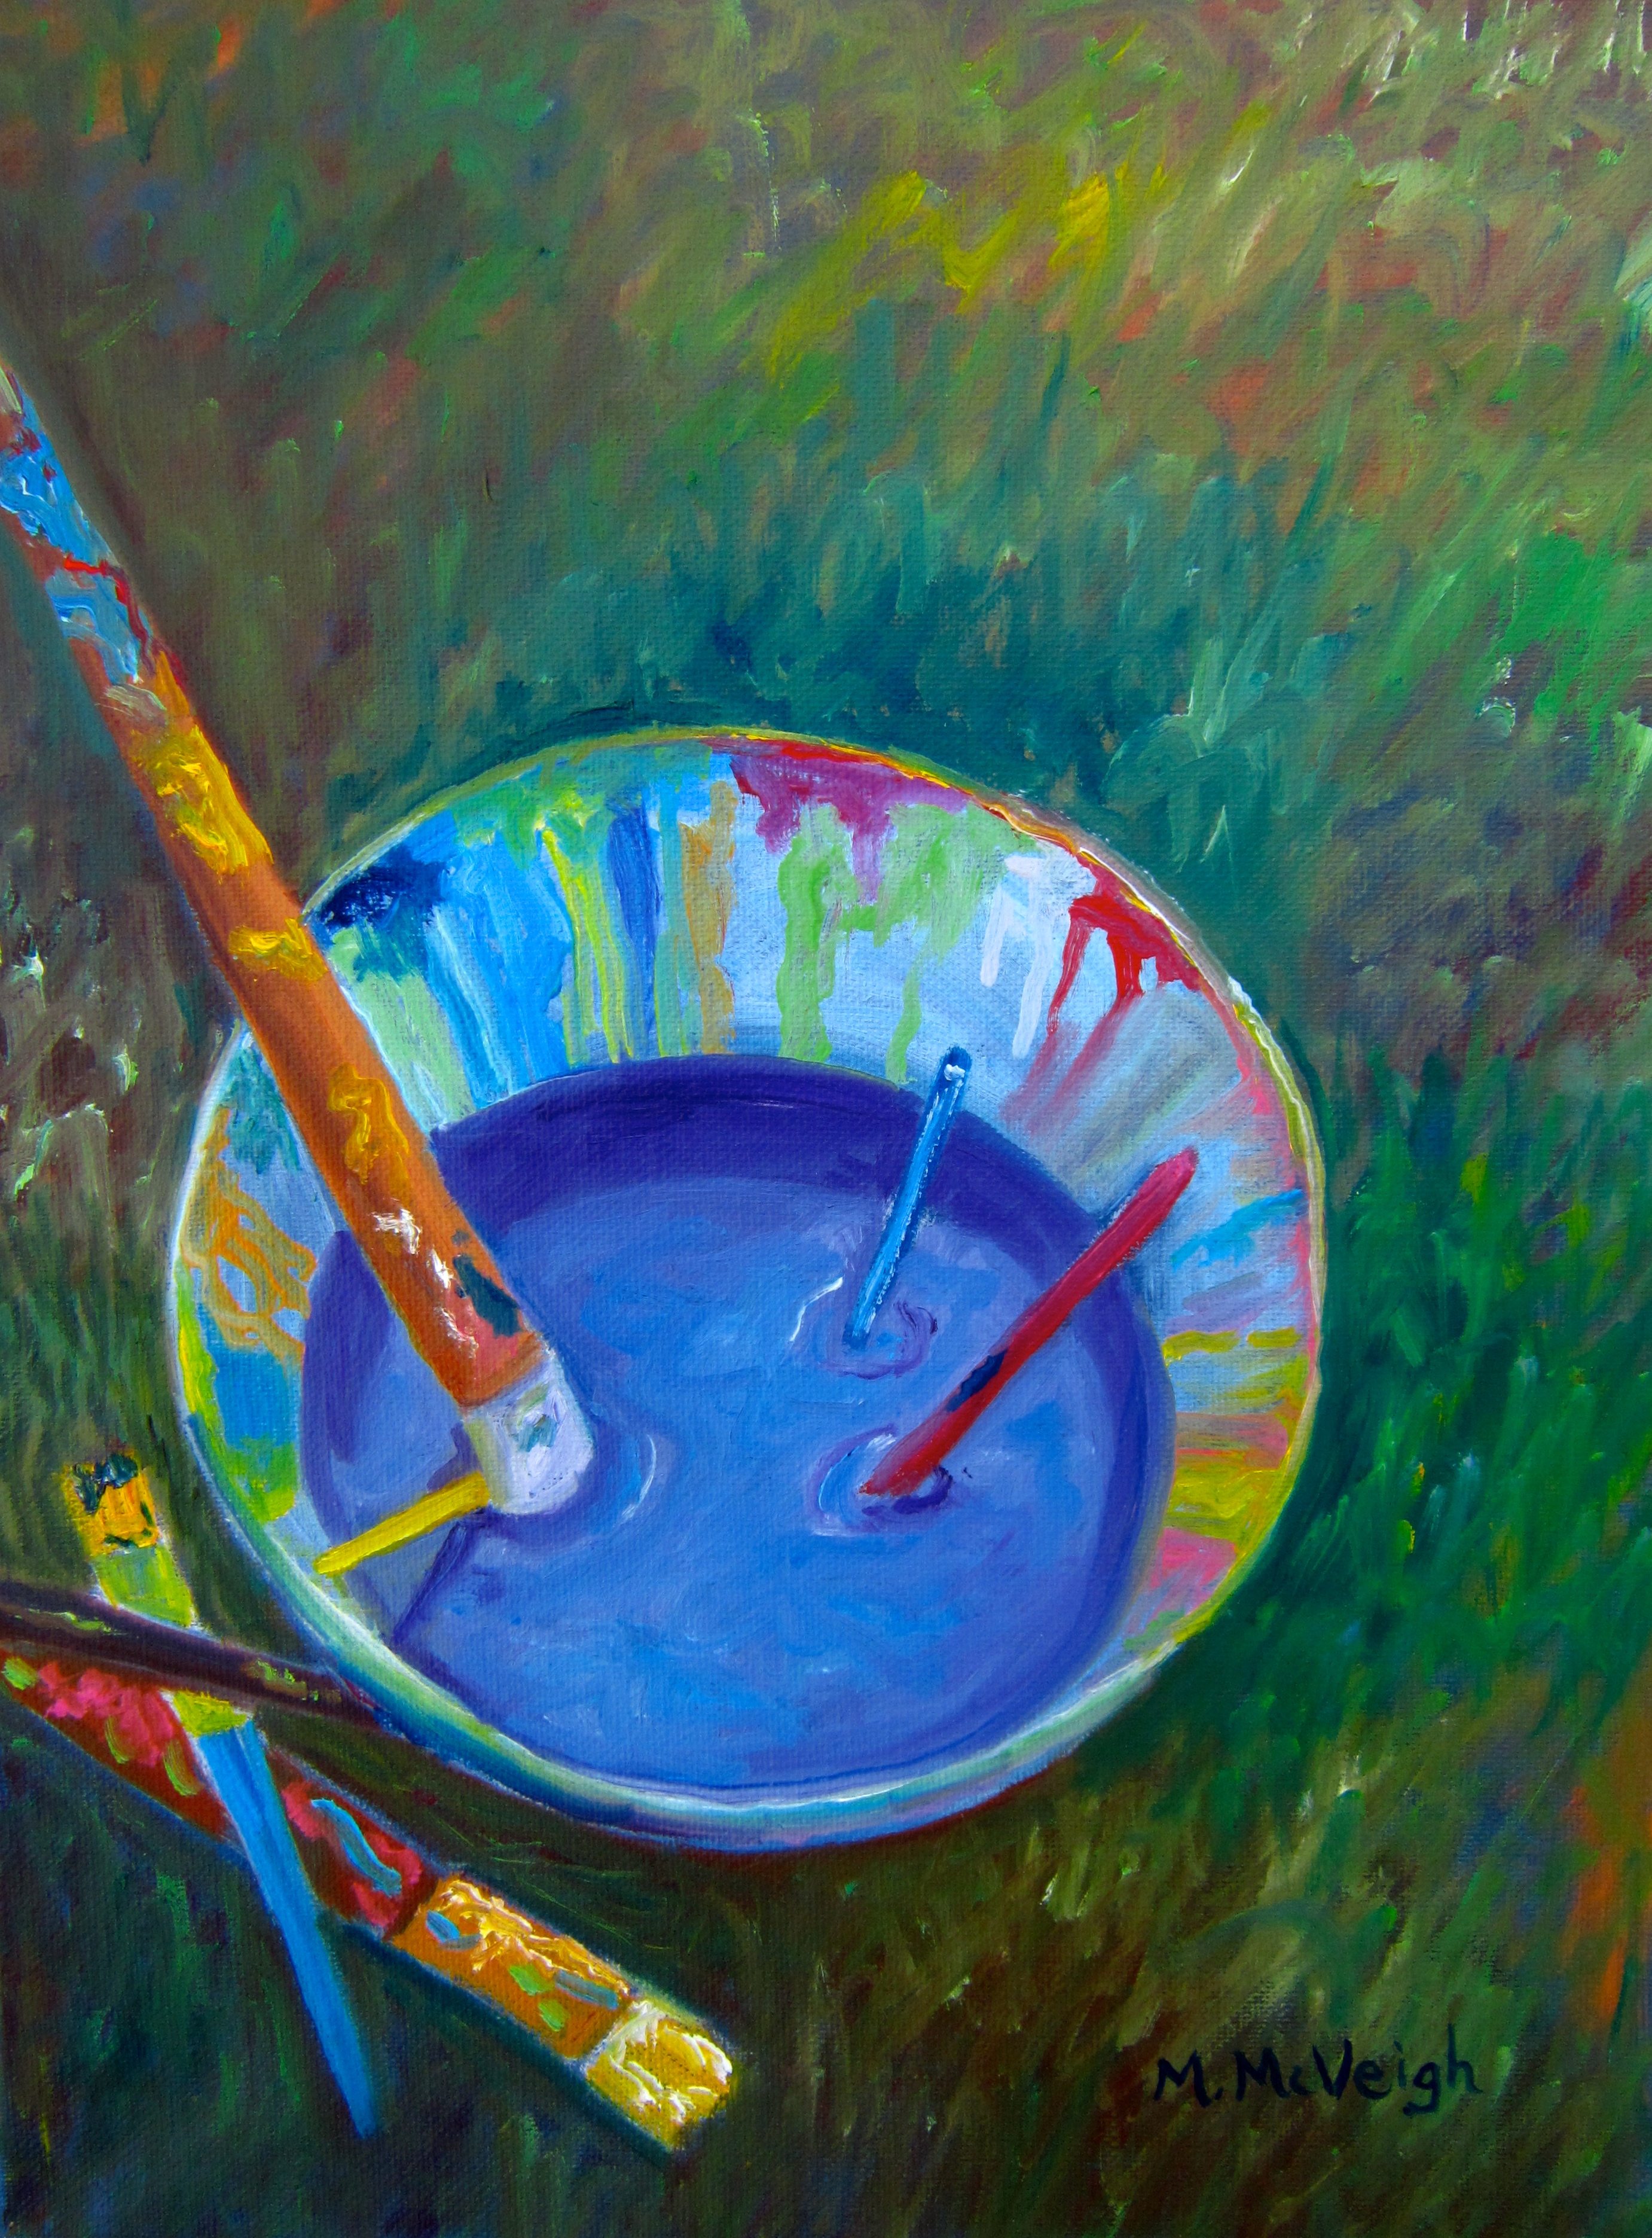 Painting Bucket